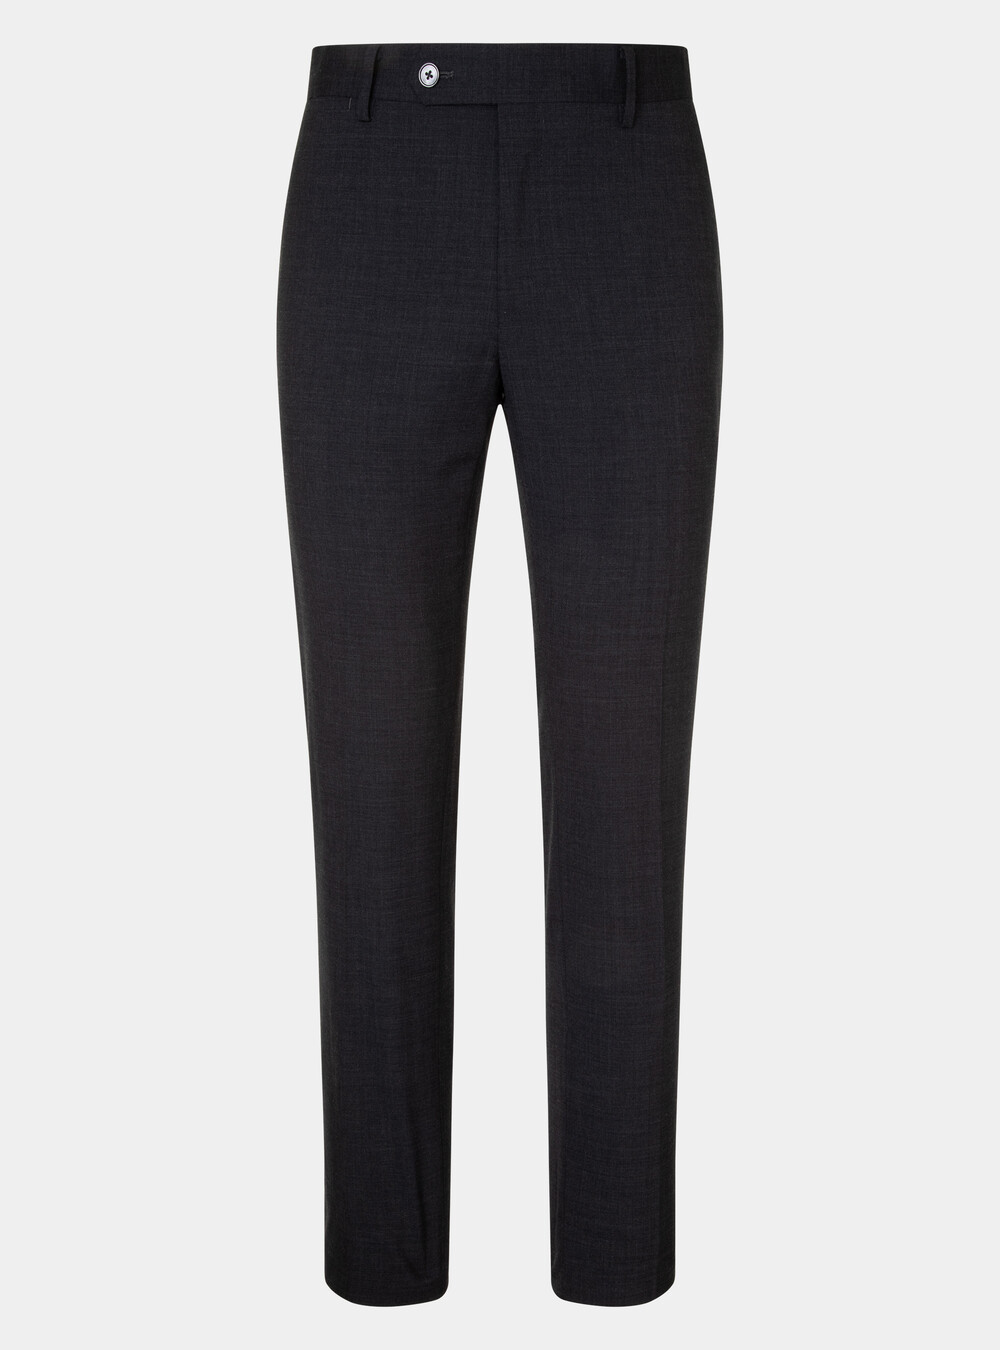 Fresh wool suit trousers | GutteridgeUS | catalog-gutteridge-storefront ...